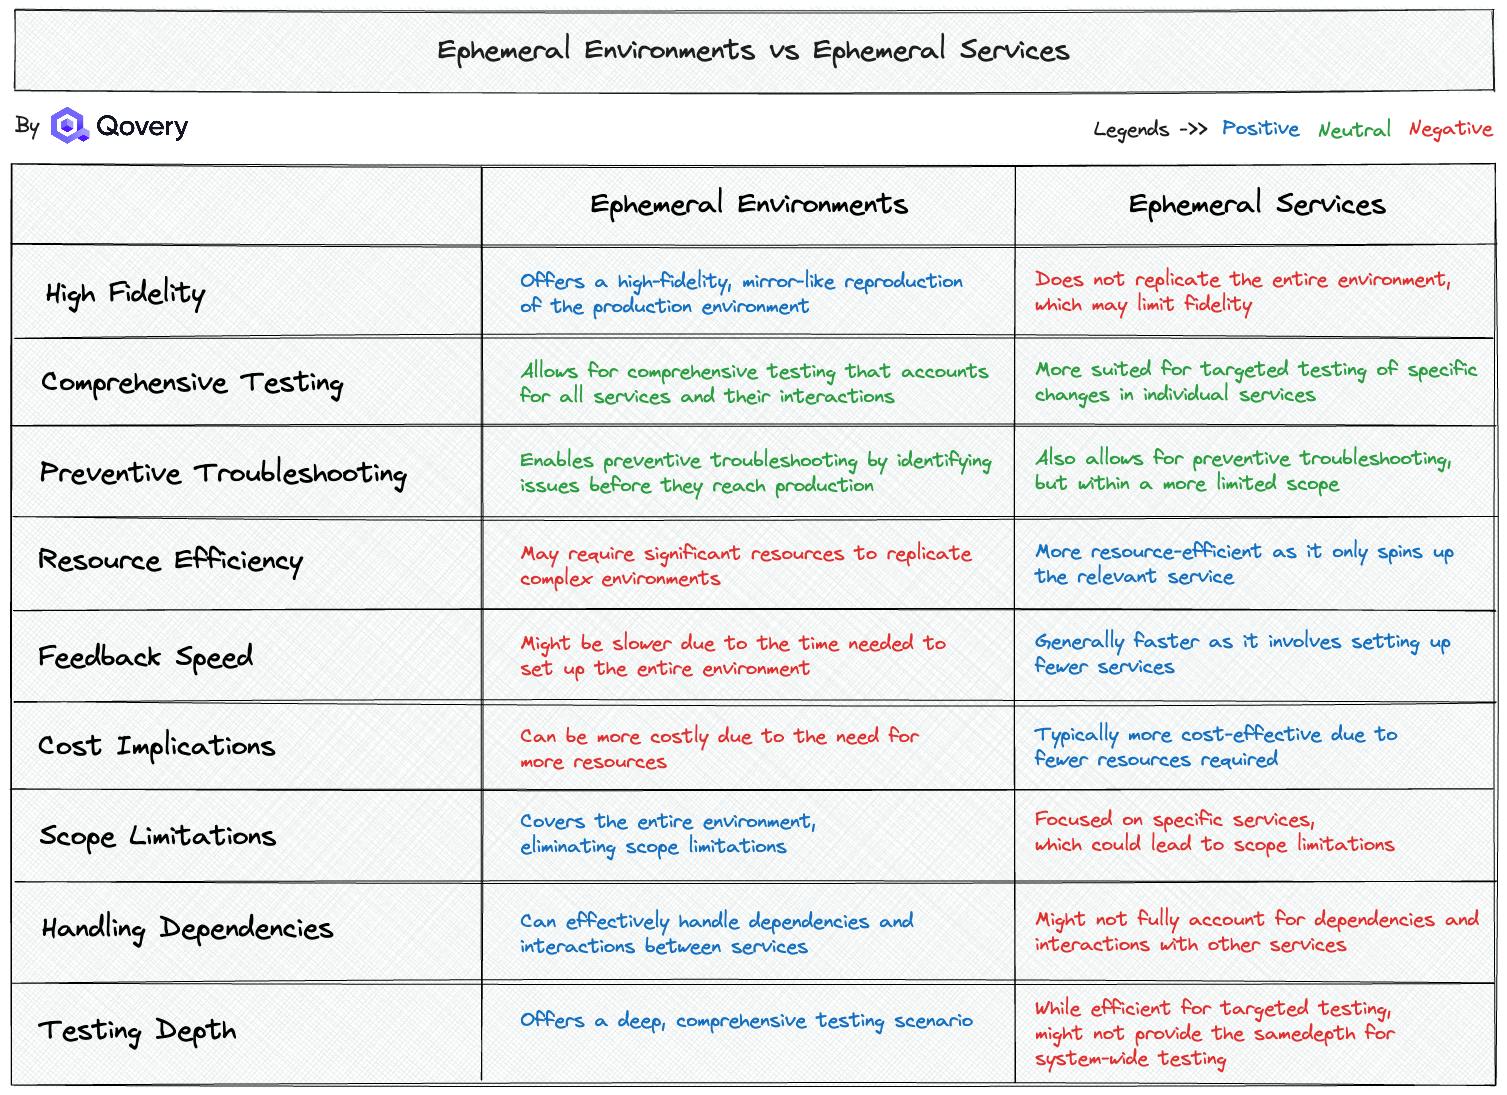 Ephemeral Environments vs Ephemeral Services - Pros and Cons Table